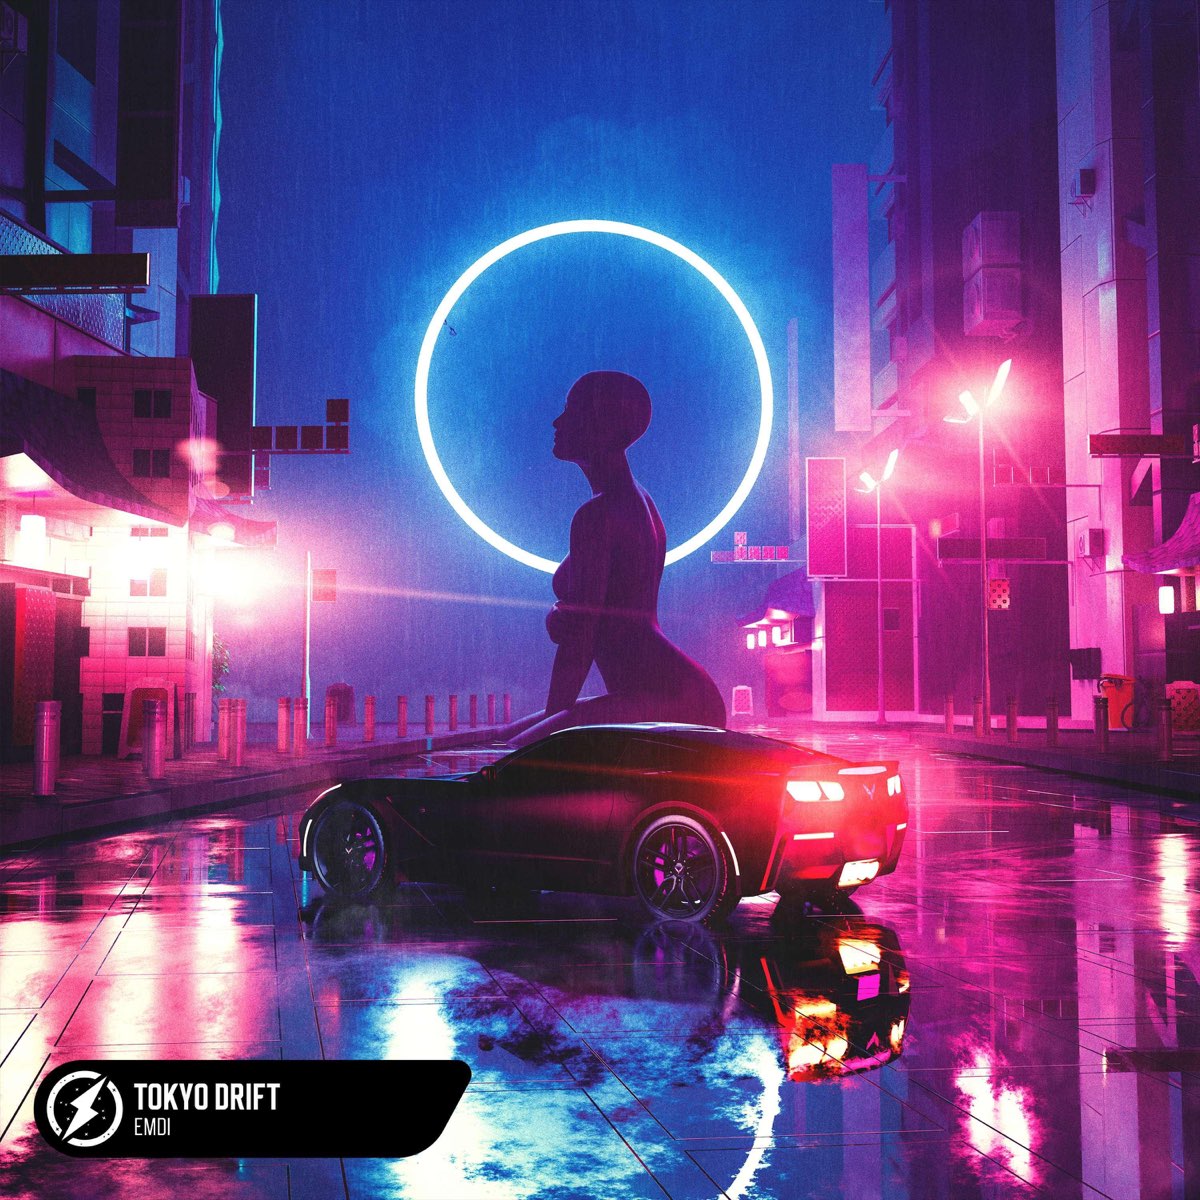 Tokyo Drift - Single by Emdi on Apple Music